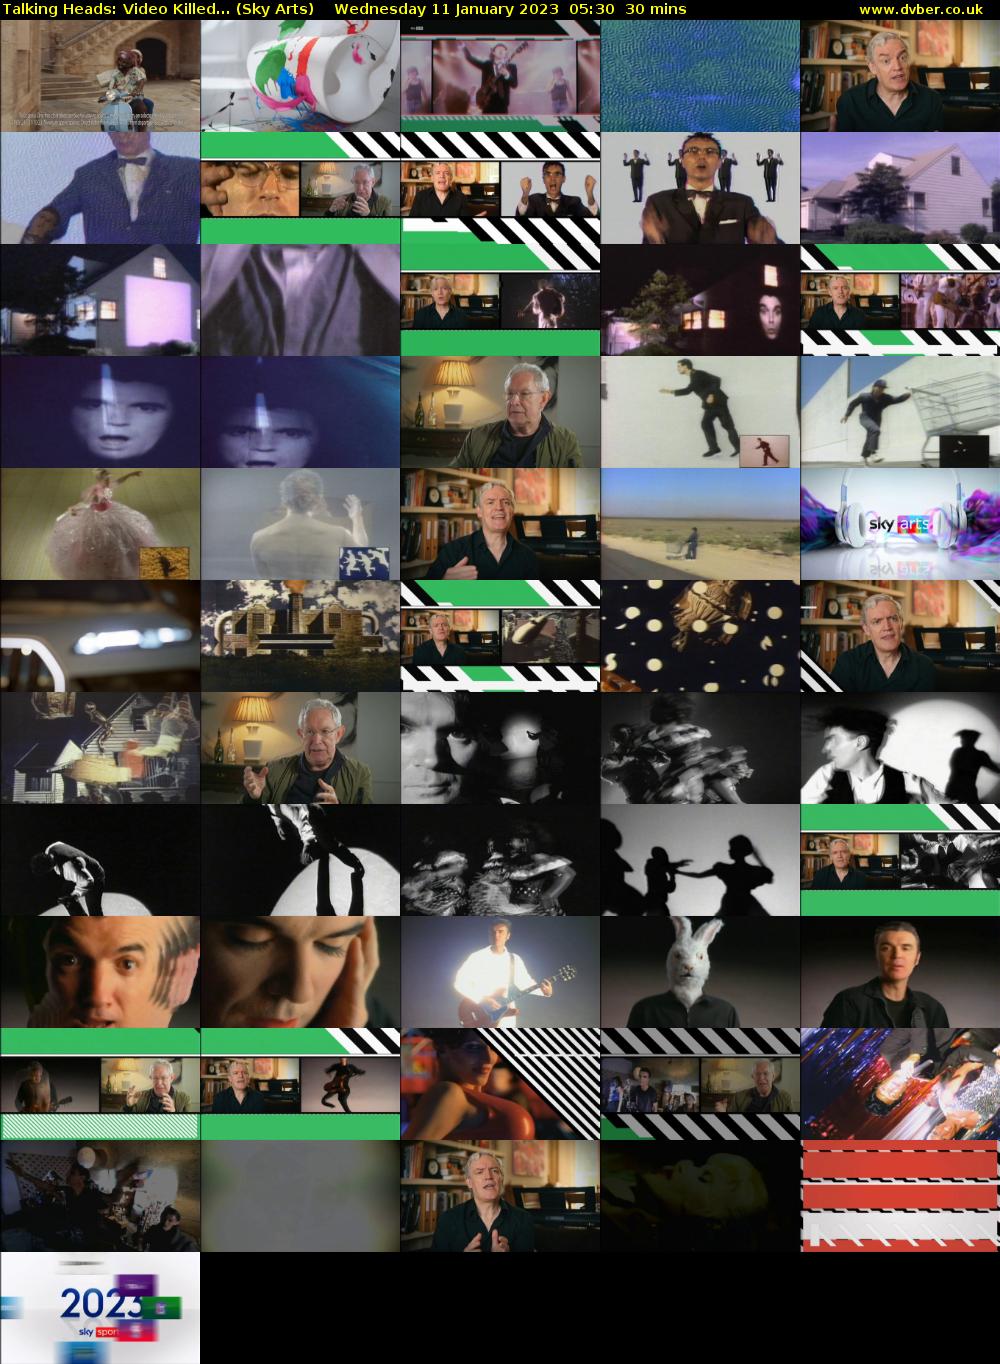 Talking Heads: Video Killed... (Sky Arts) Wednesday 11 January 2023 05:30 - 06:00